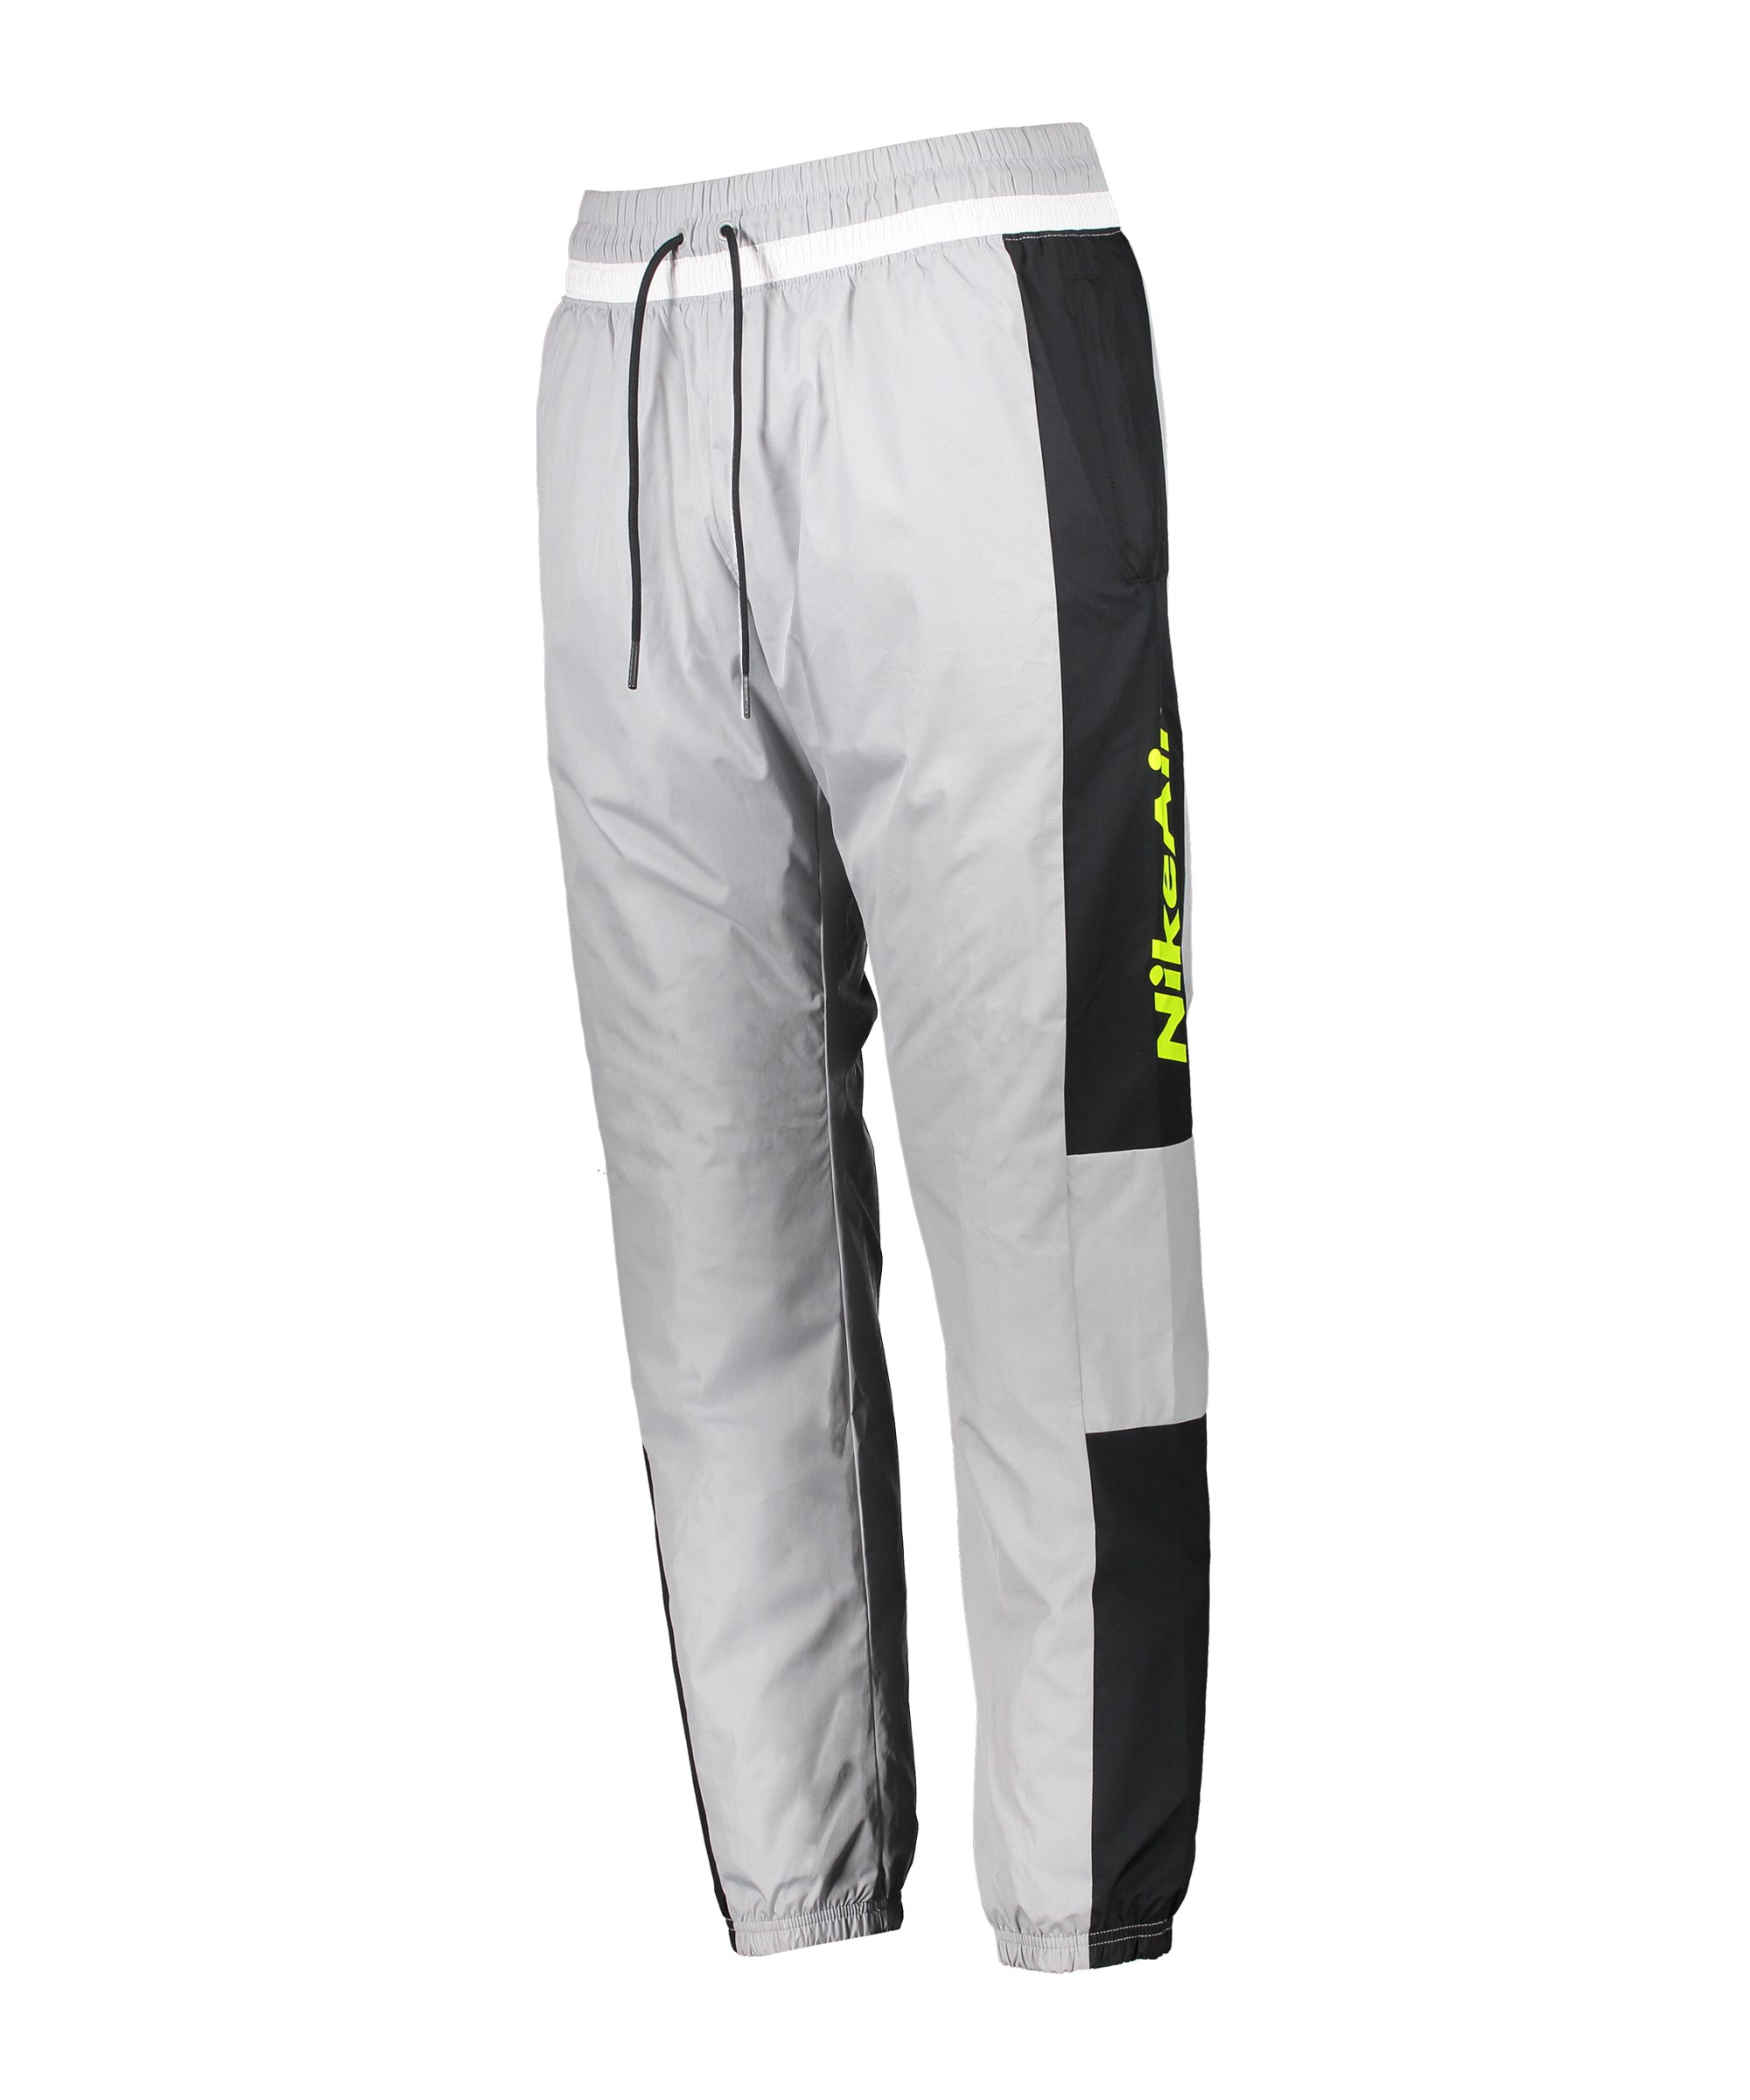 Nike Air Woven Jogginghose Grau Schwarz F077 - grau